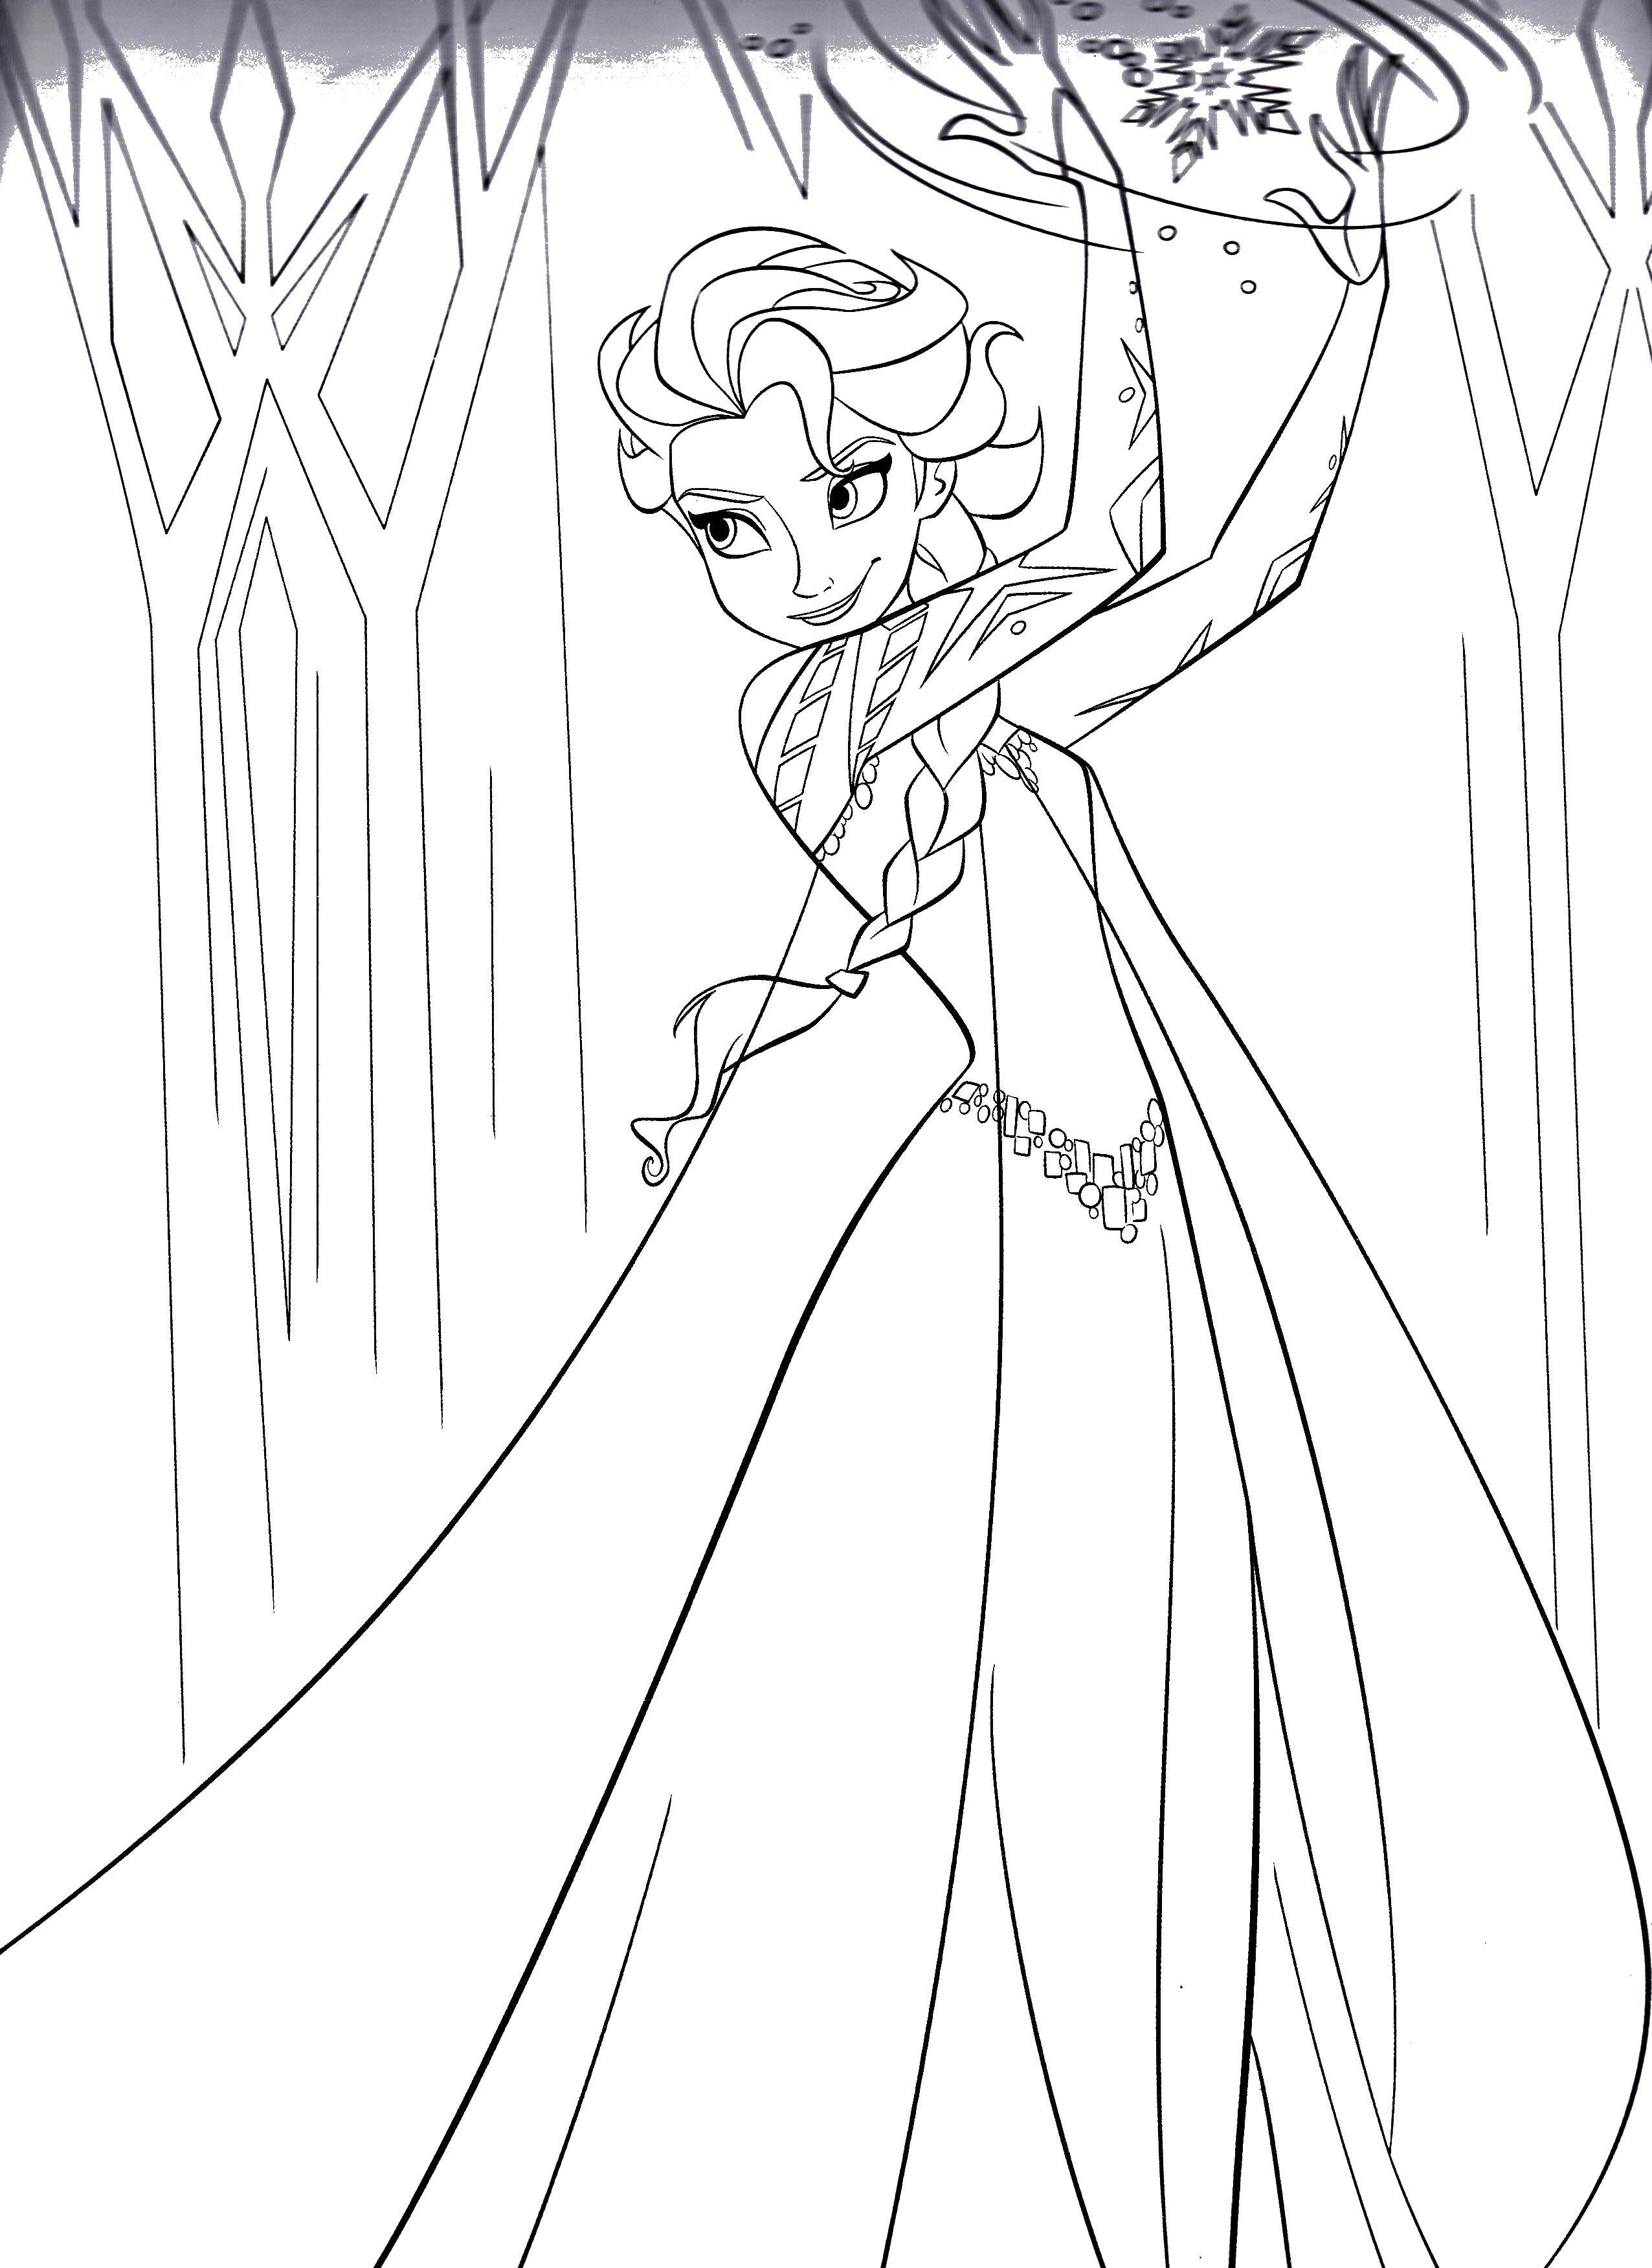 Coloring Princess Elsa. Category Princess. Tags:  Princess , fairytale, Elsa.